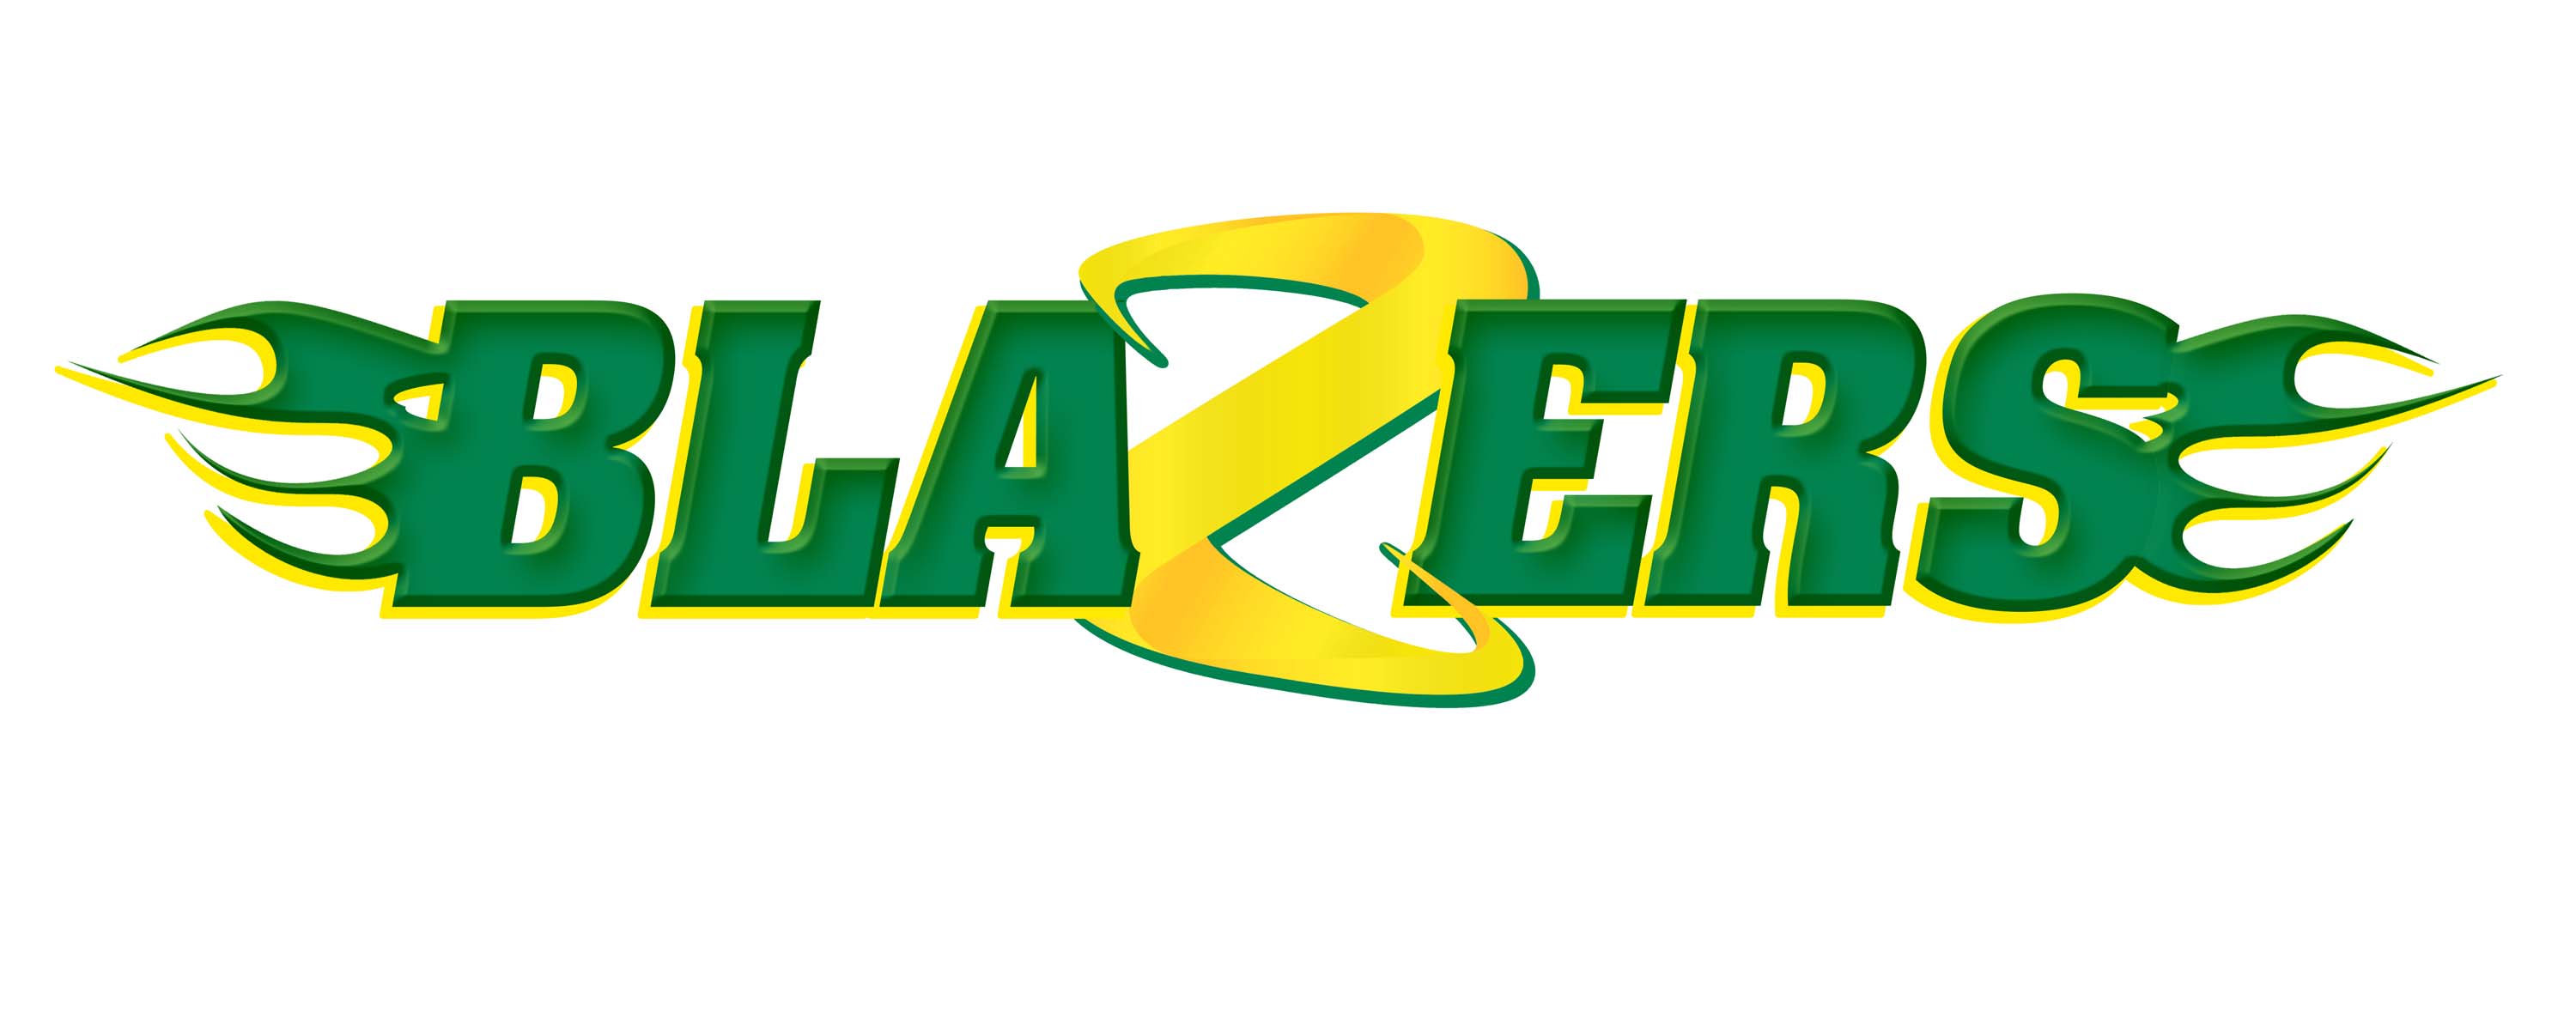 new blazers logo.jpg